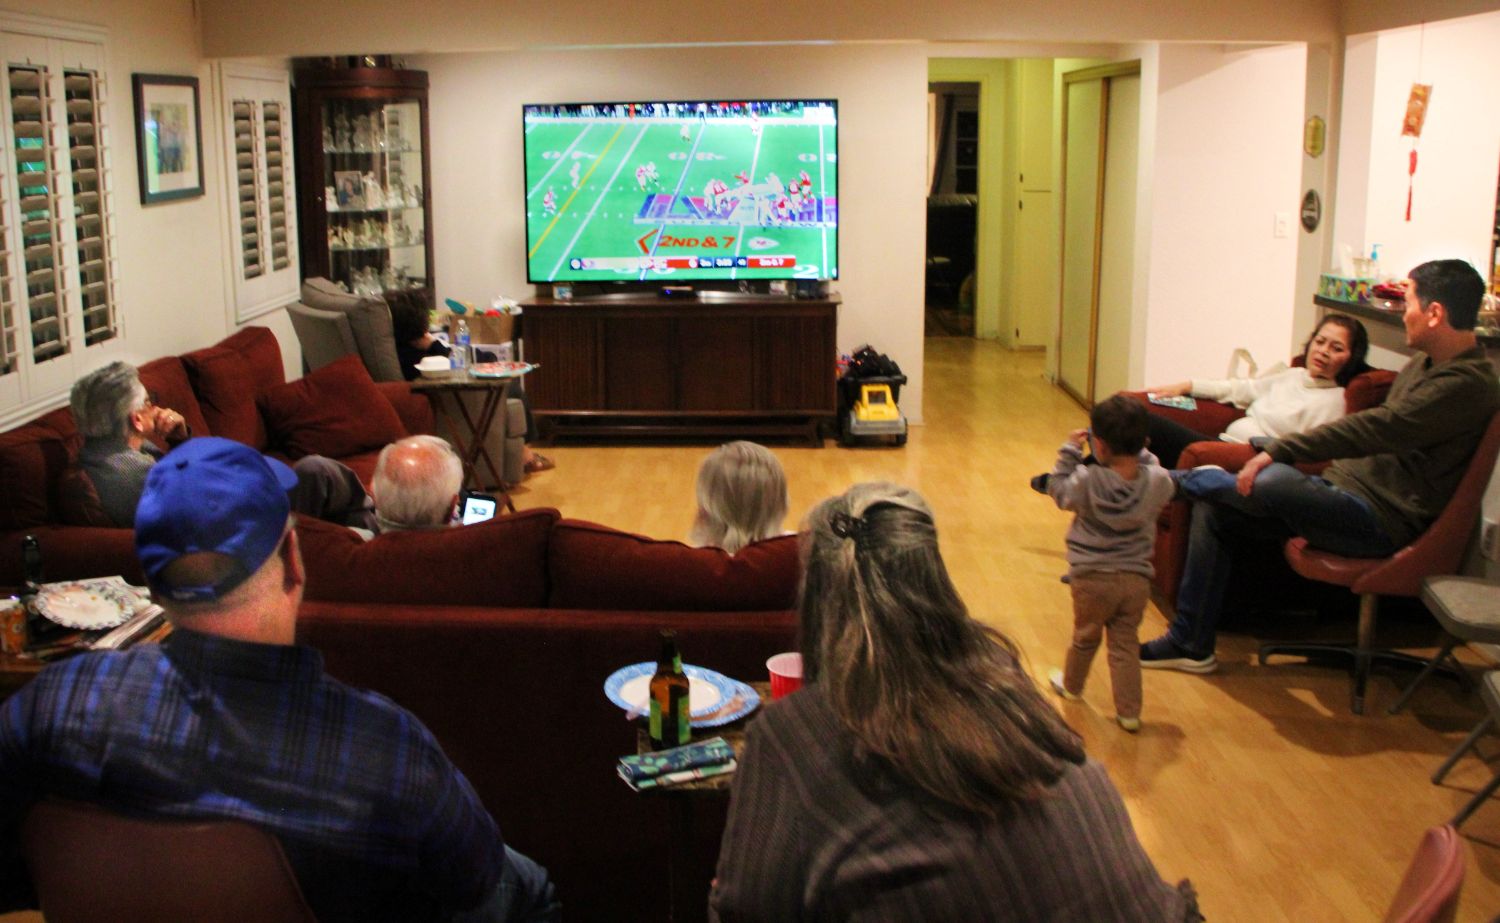 PHOTO: Henk Friezer | The South Pasadenan | The Kohler family Super Bowl party.